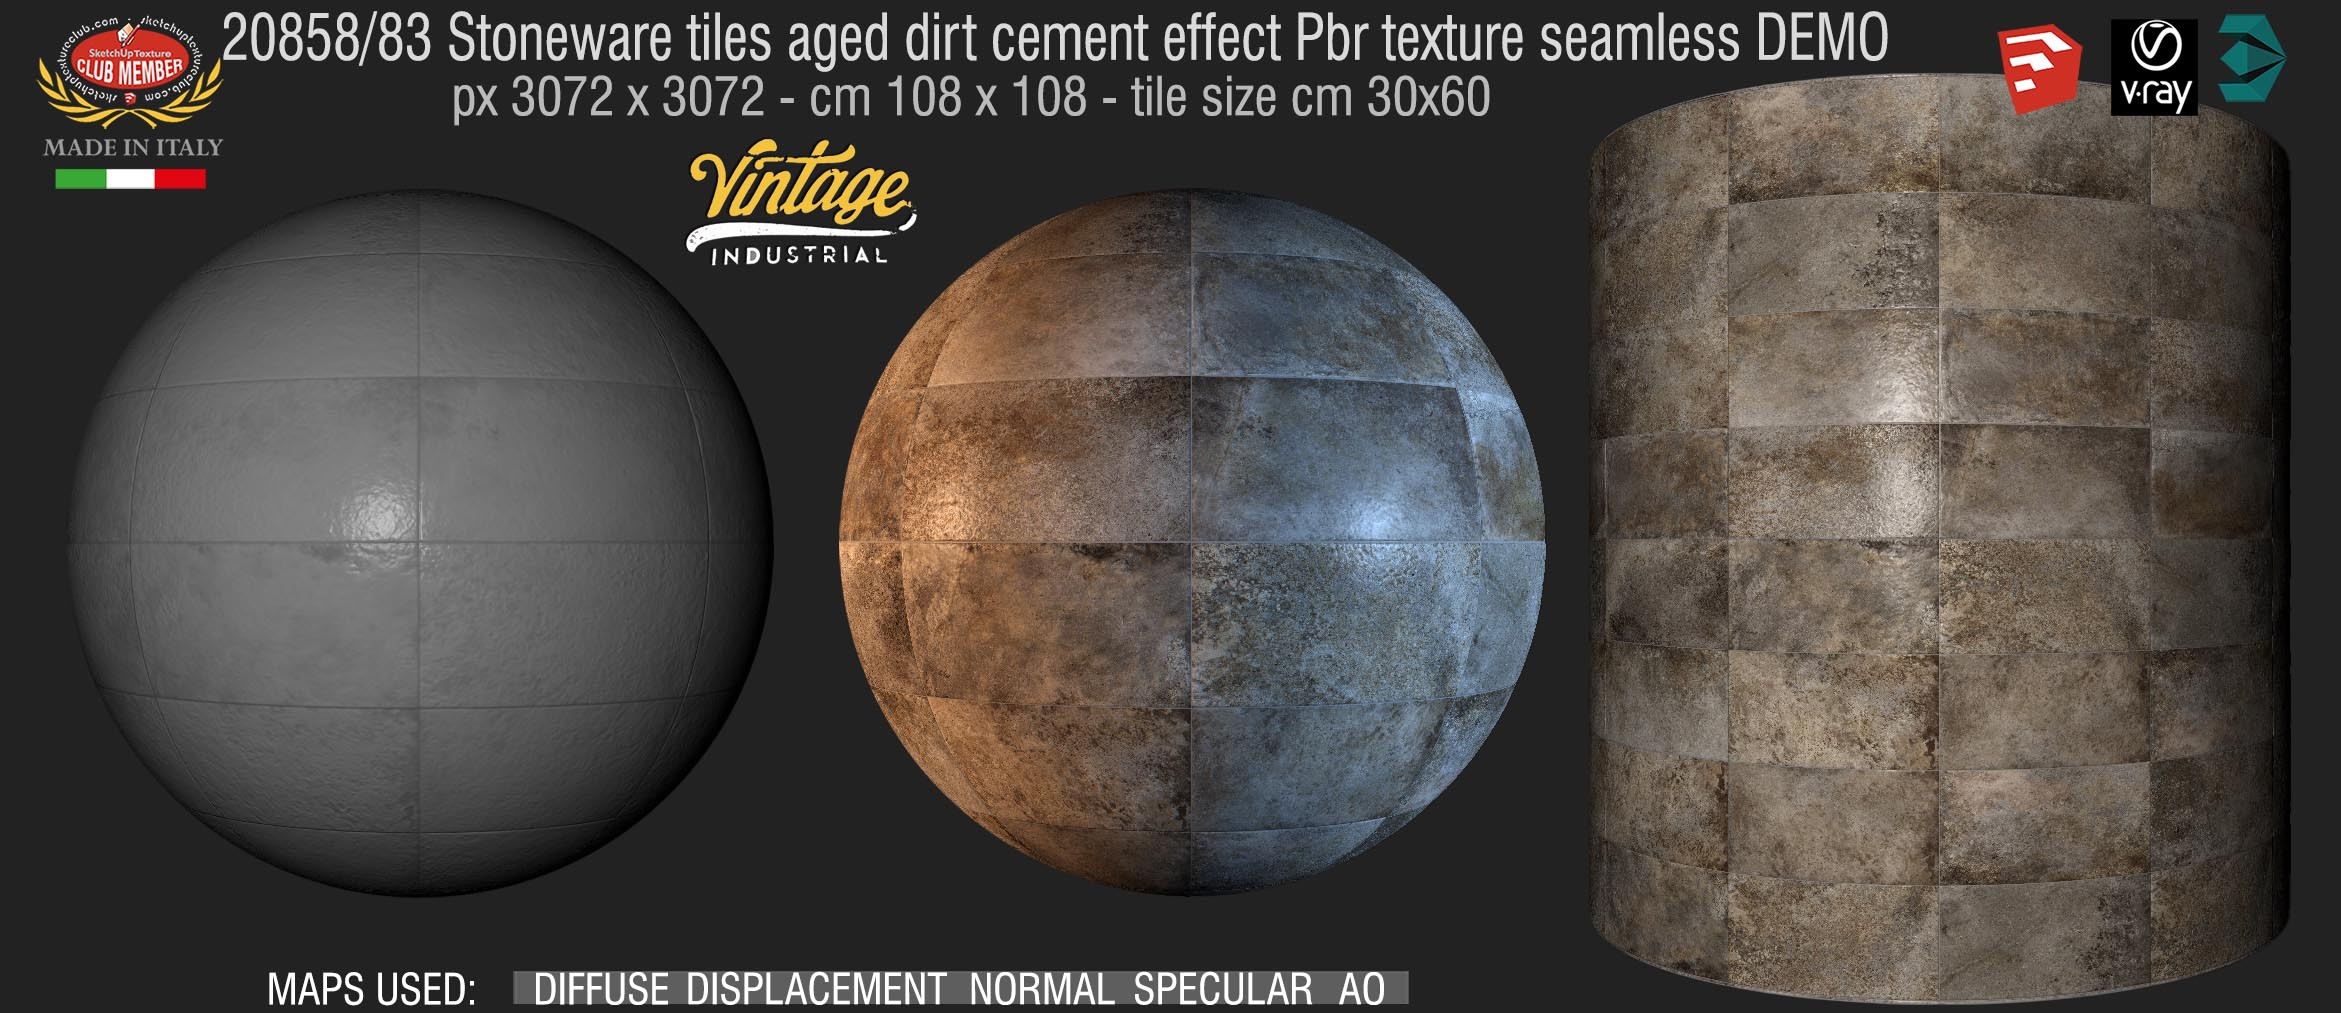 83_stoneware tiles aged dirt cement effect pbr texture seamless DEMO